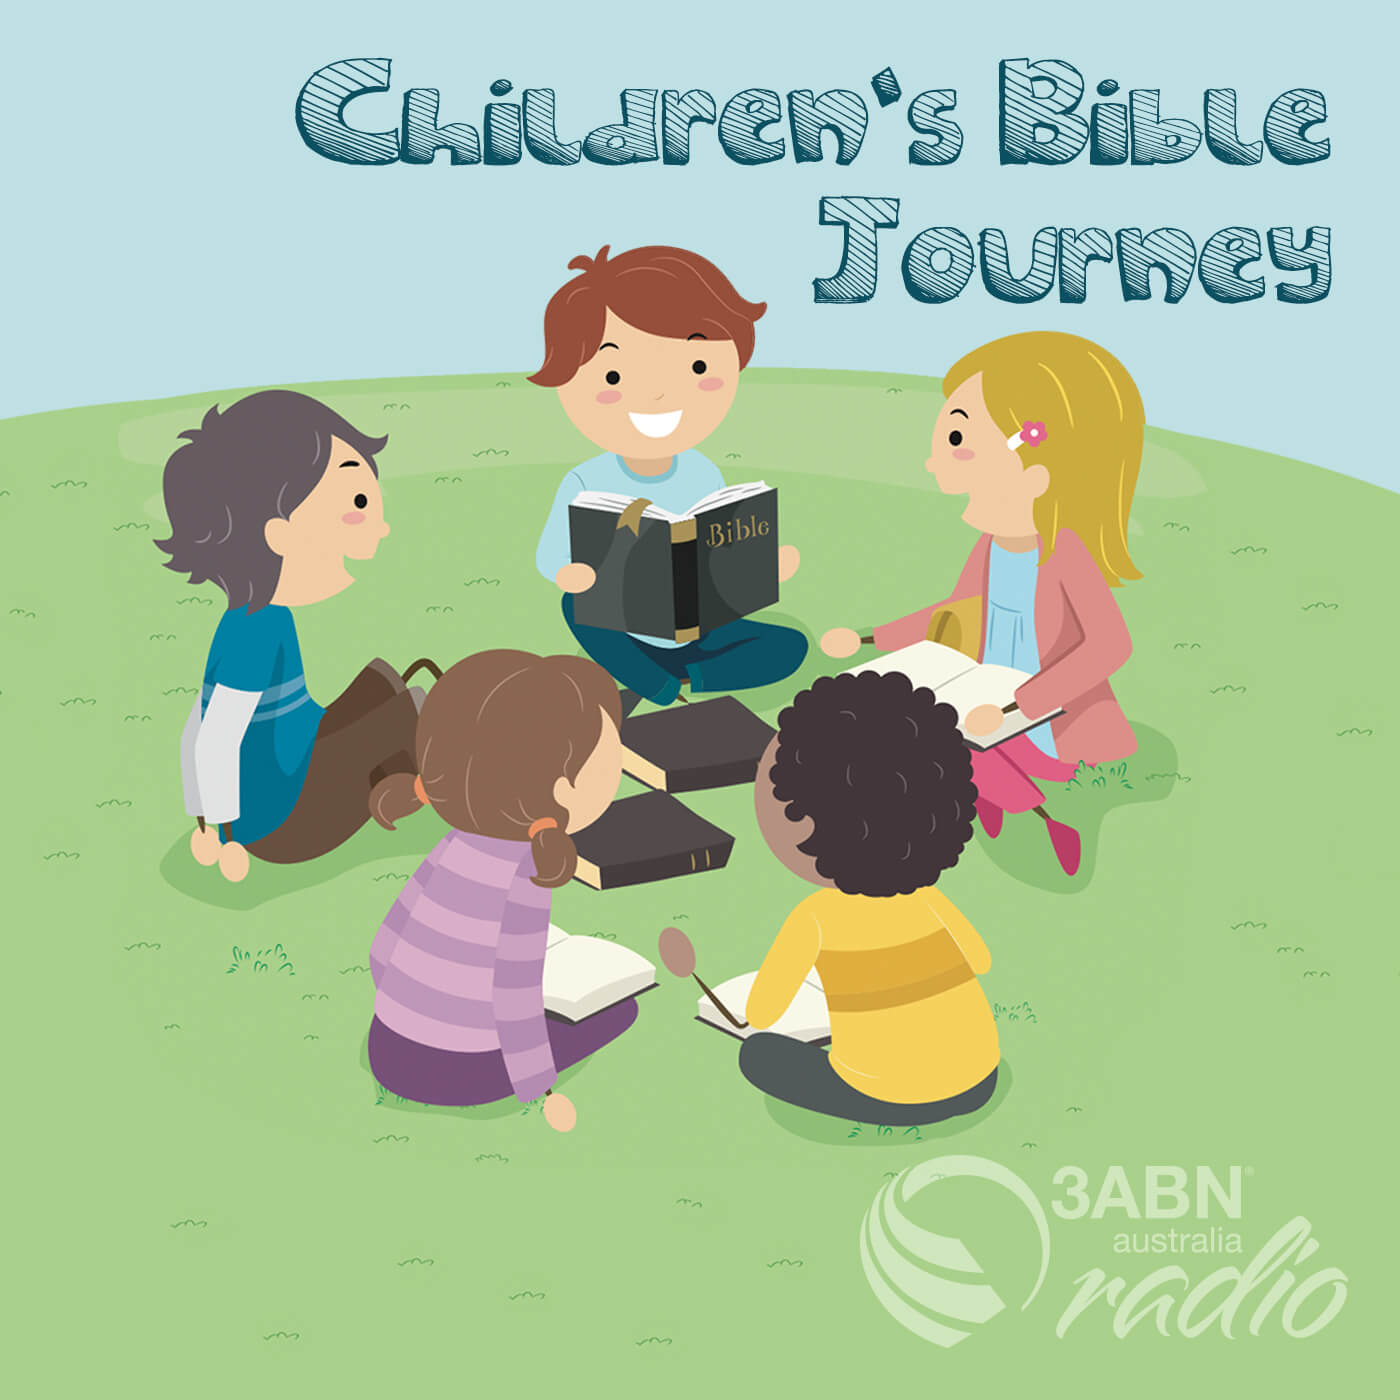 Children's Bible Journey - 2163